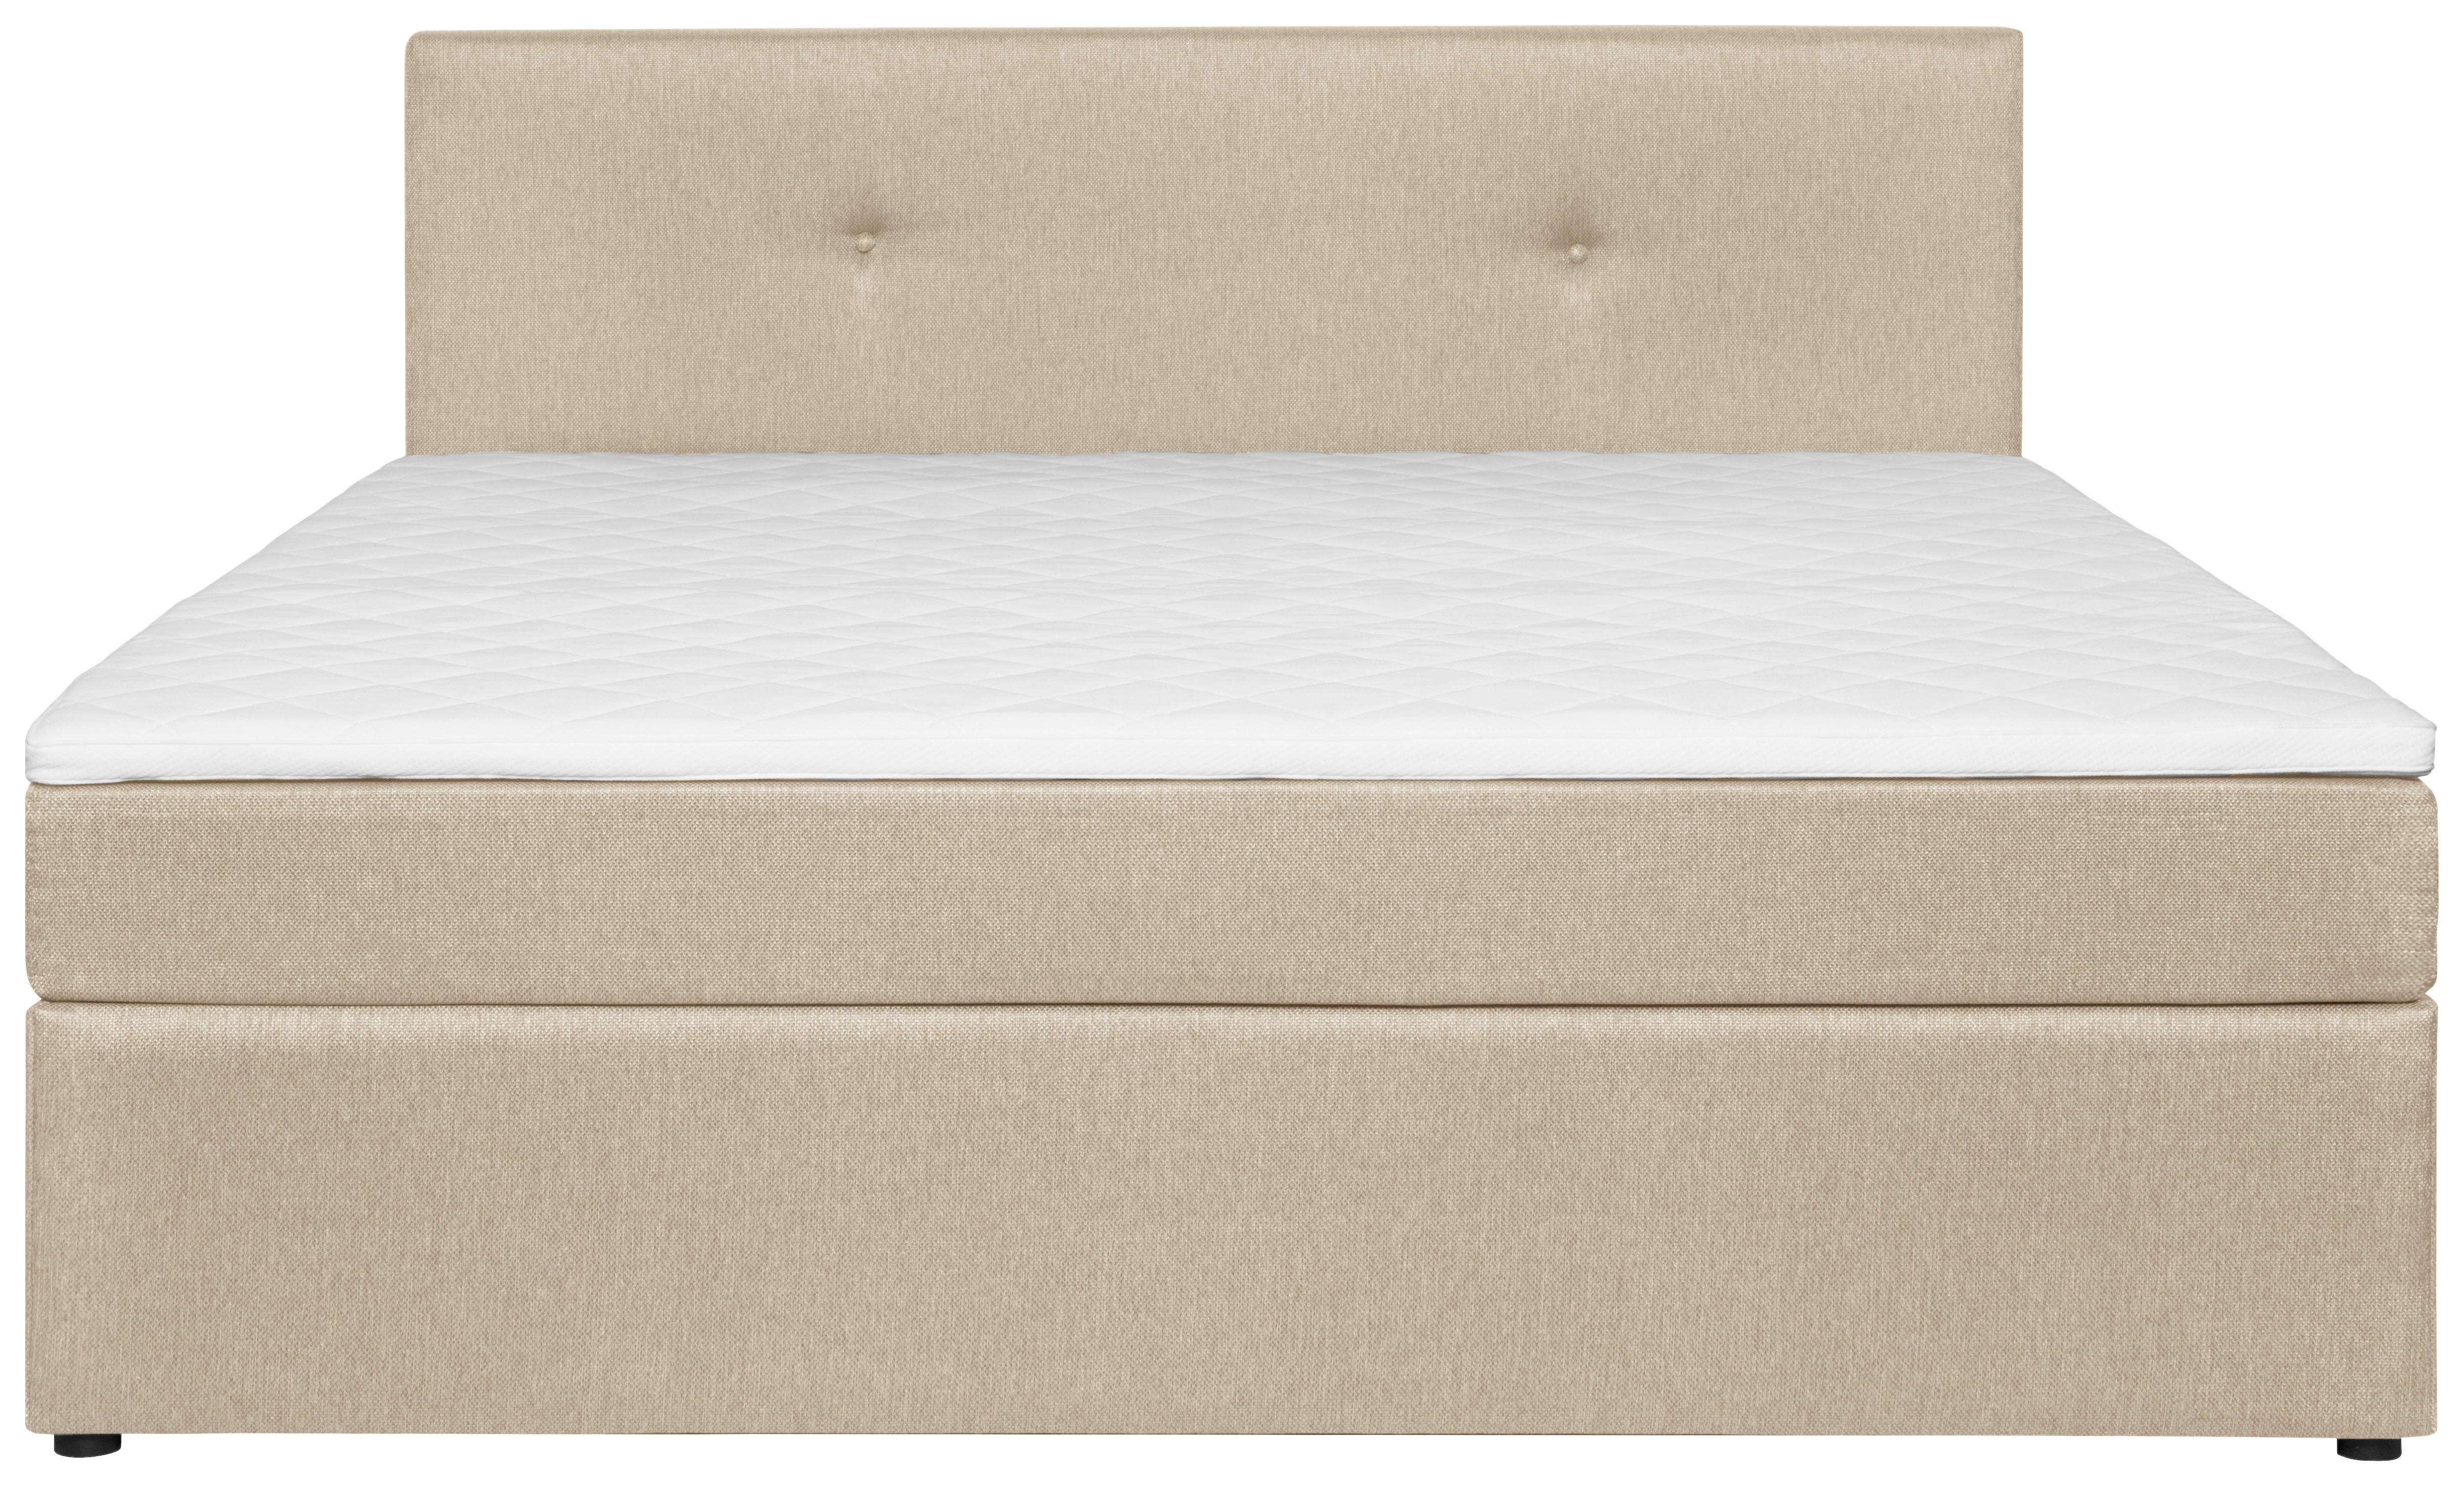 BOX KREVET    160/200 cm  - boje pijeska/crna, Konvencionalno, drvo/tekstil (160/200cm) - P & B